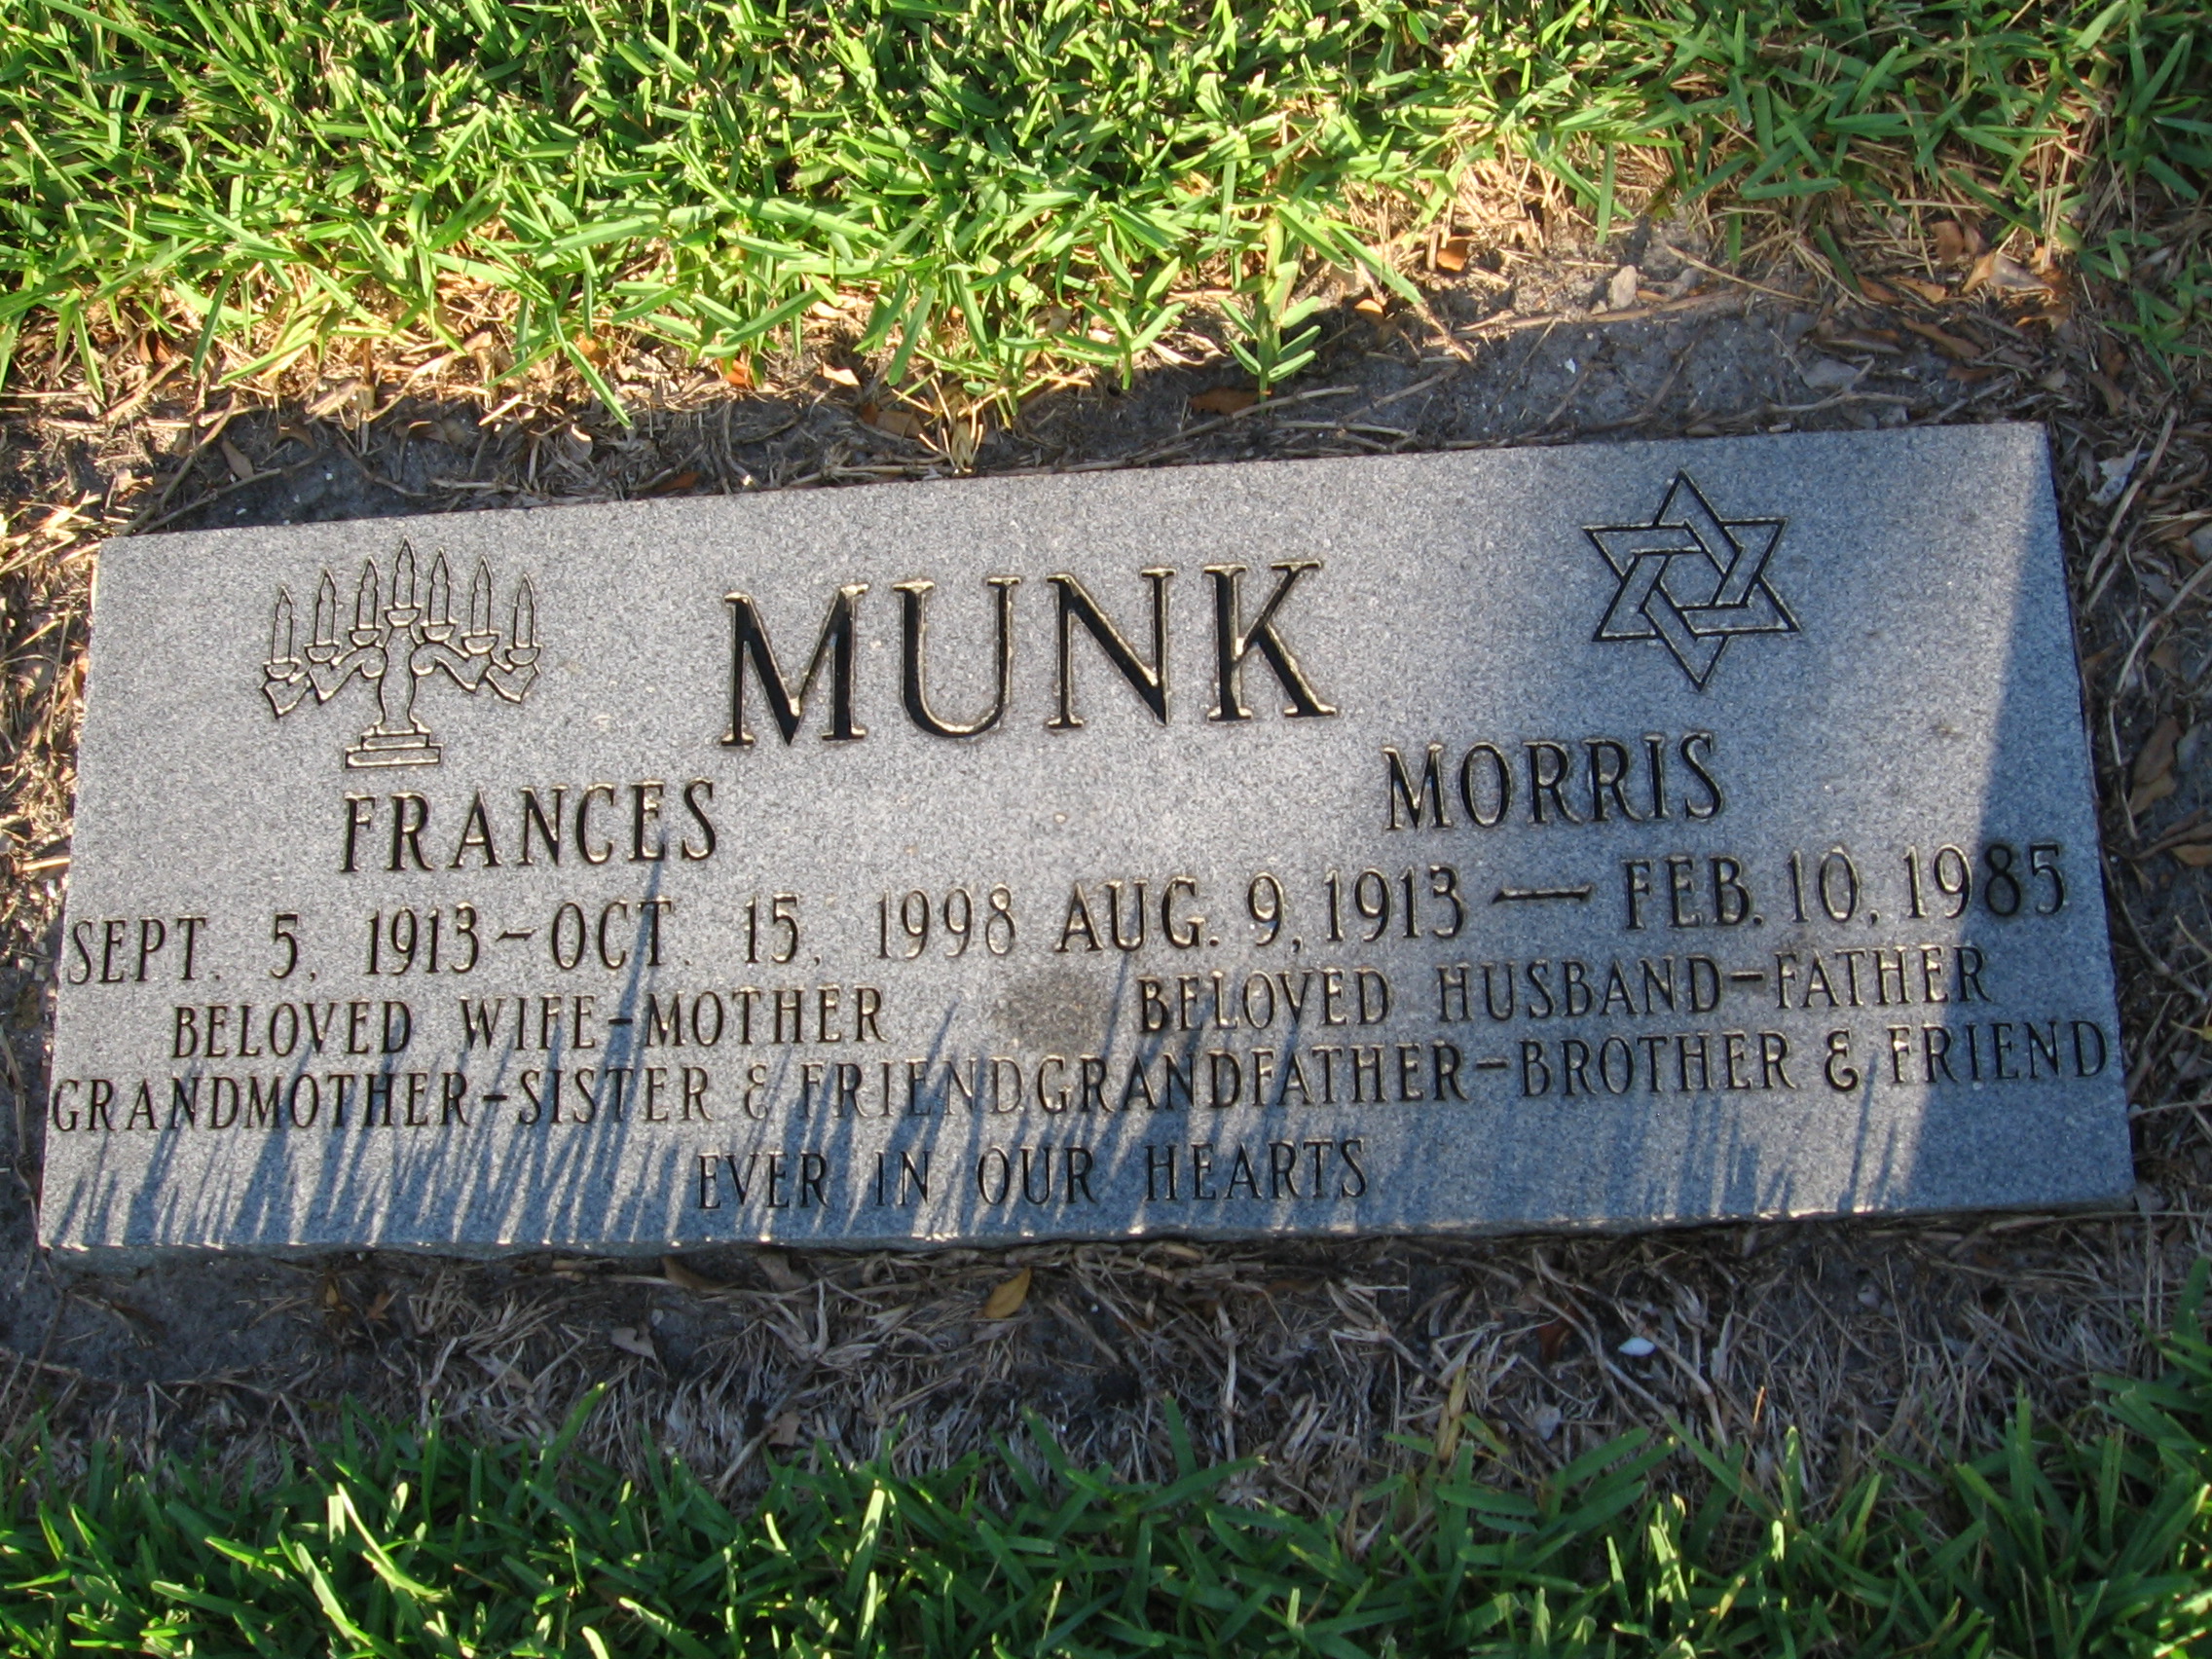 Frances Munk